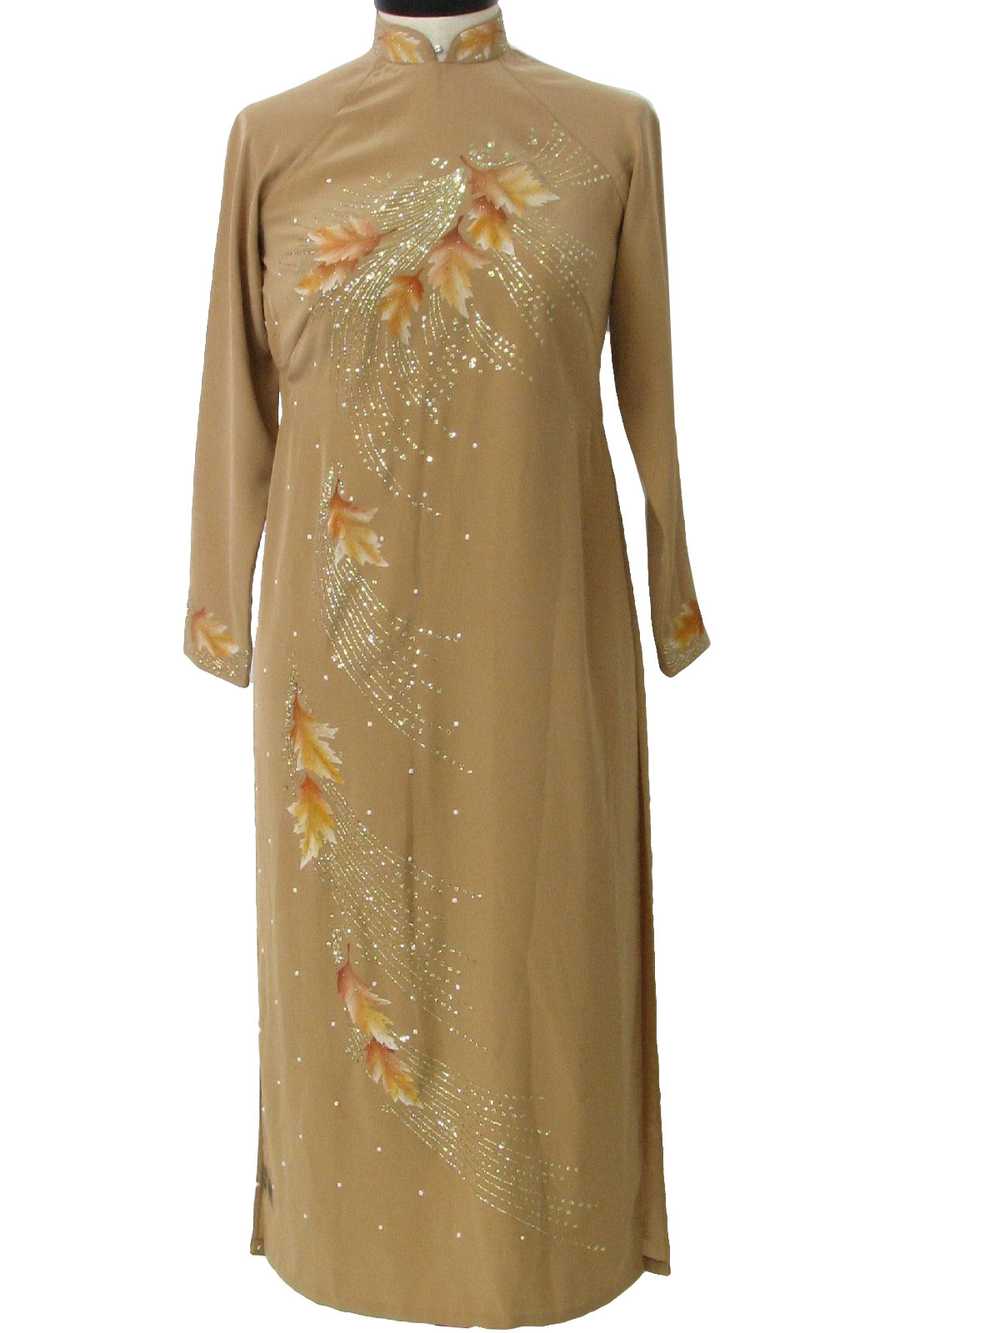 1980's Cheongsam Dress - image 1